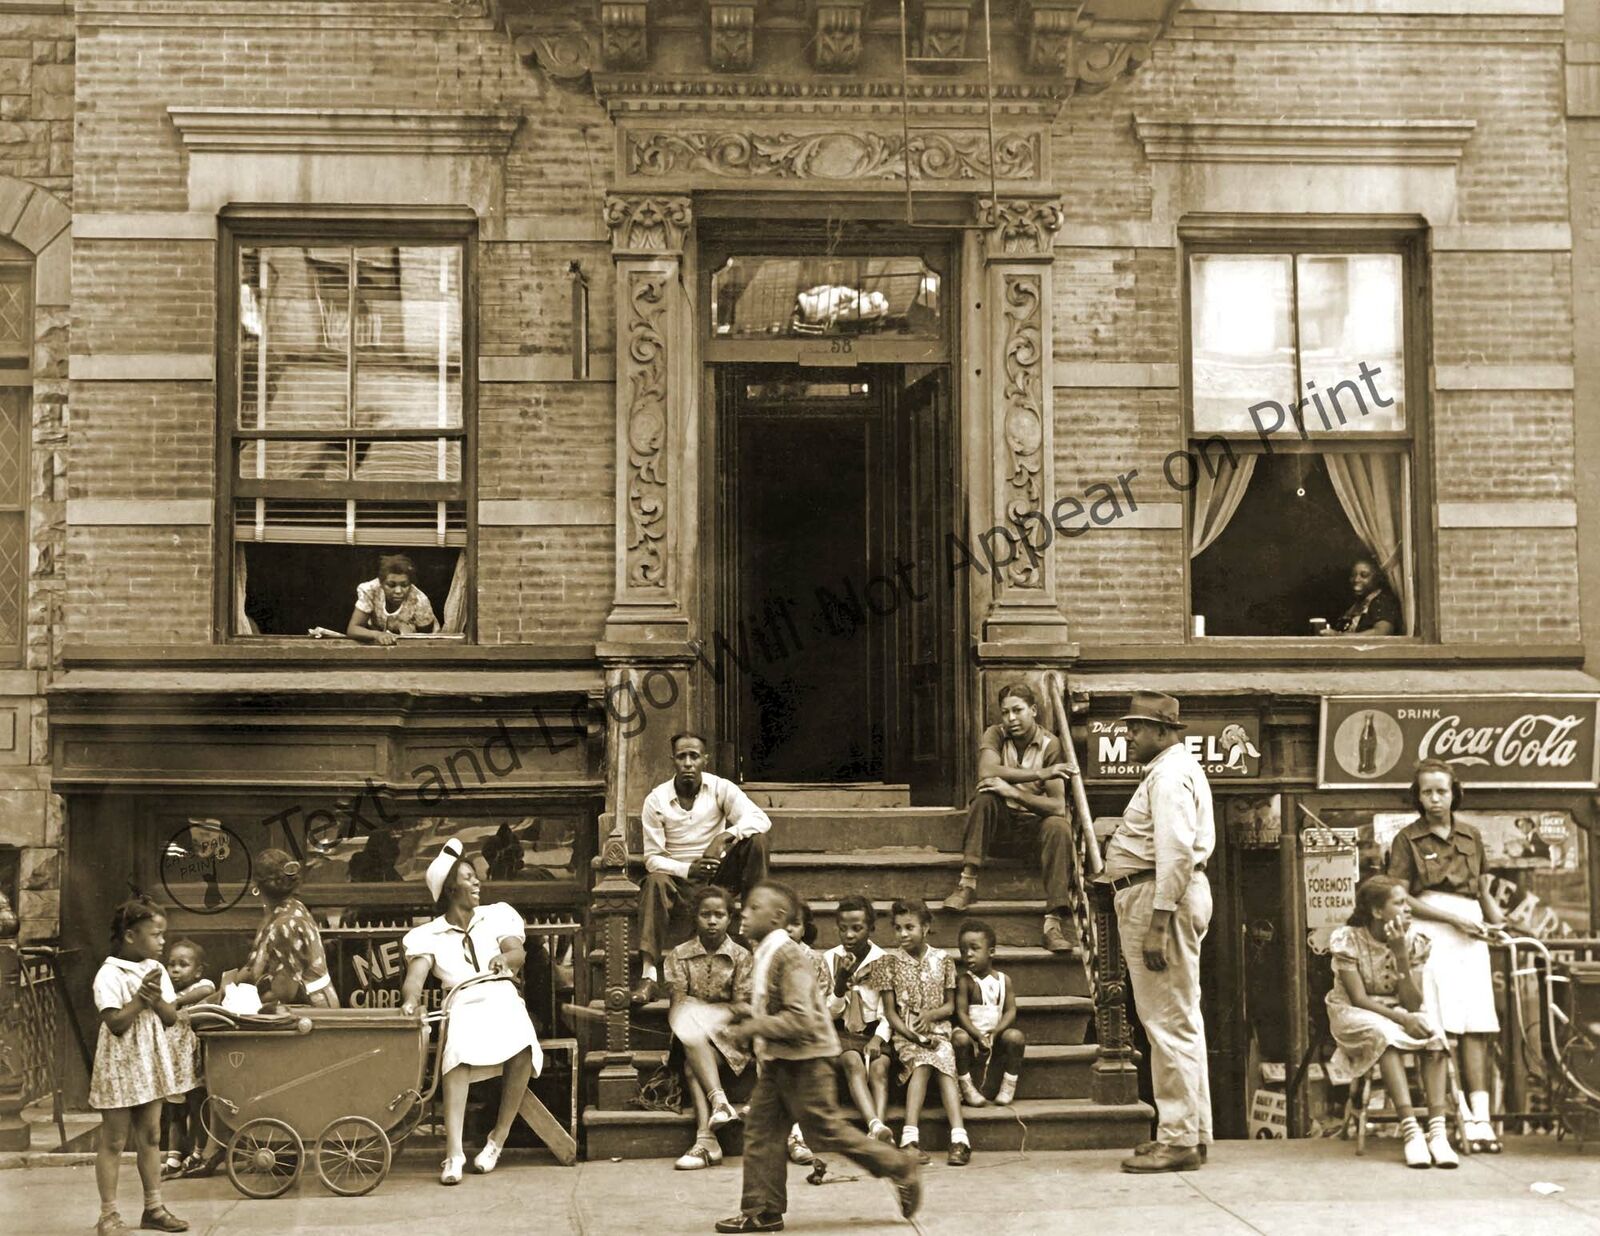 1935-1939 Harlem Tenement in Summer, NY Vintage Old Photo 8.5